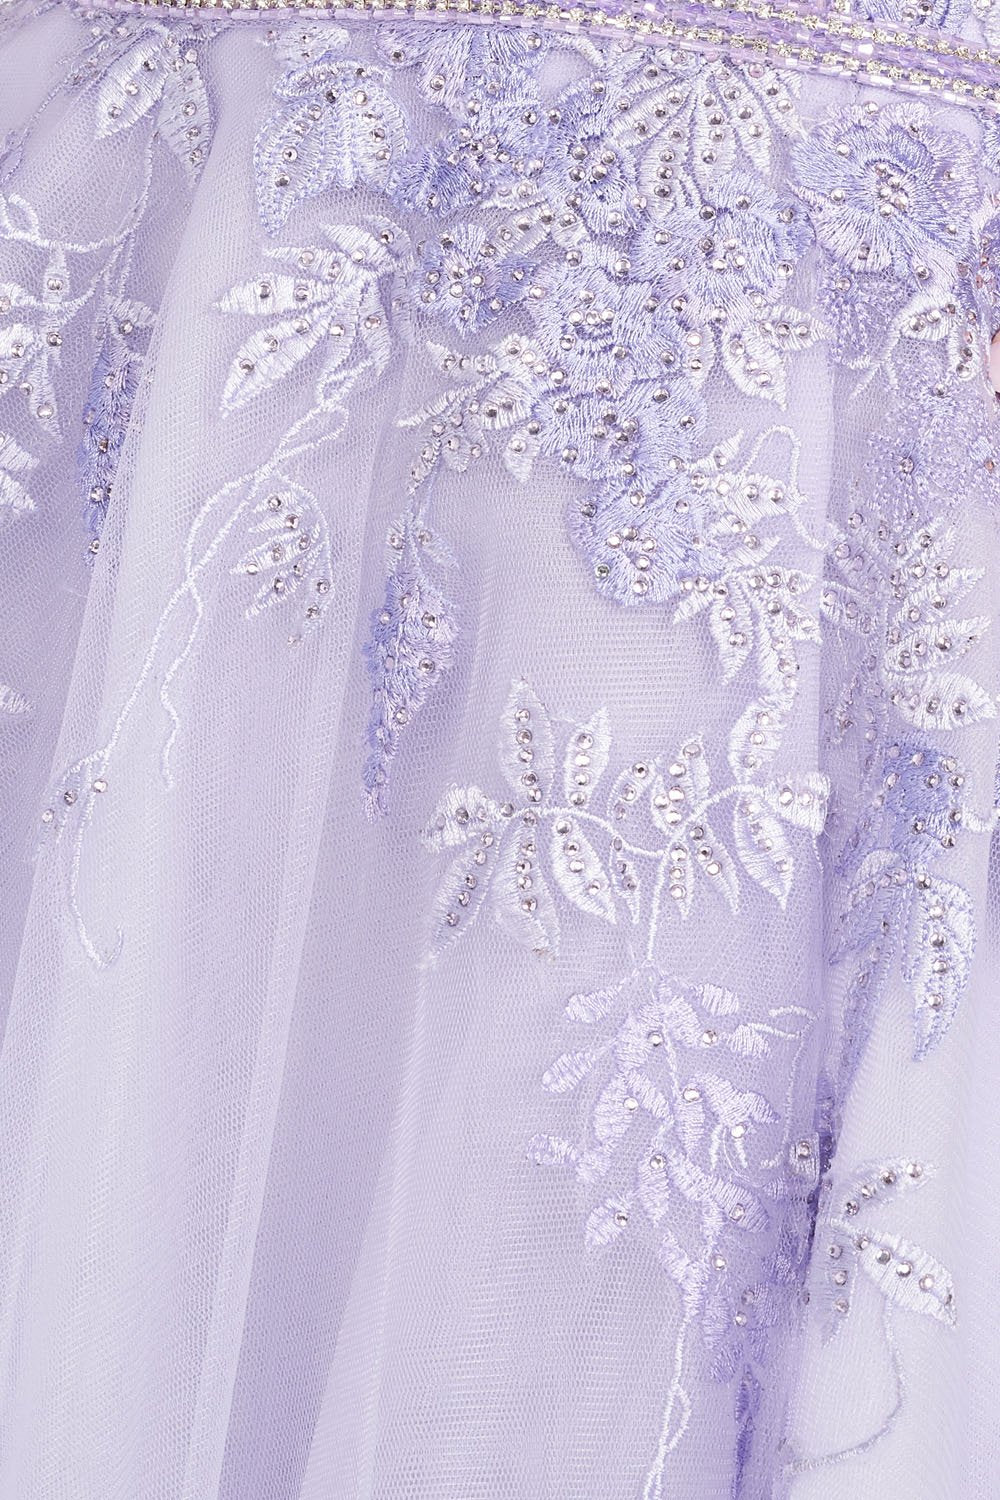 Ellie Wilde Lavender EW122111 Prom Dress Image.  Lavender formal dress.